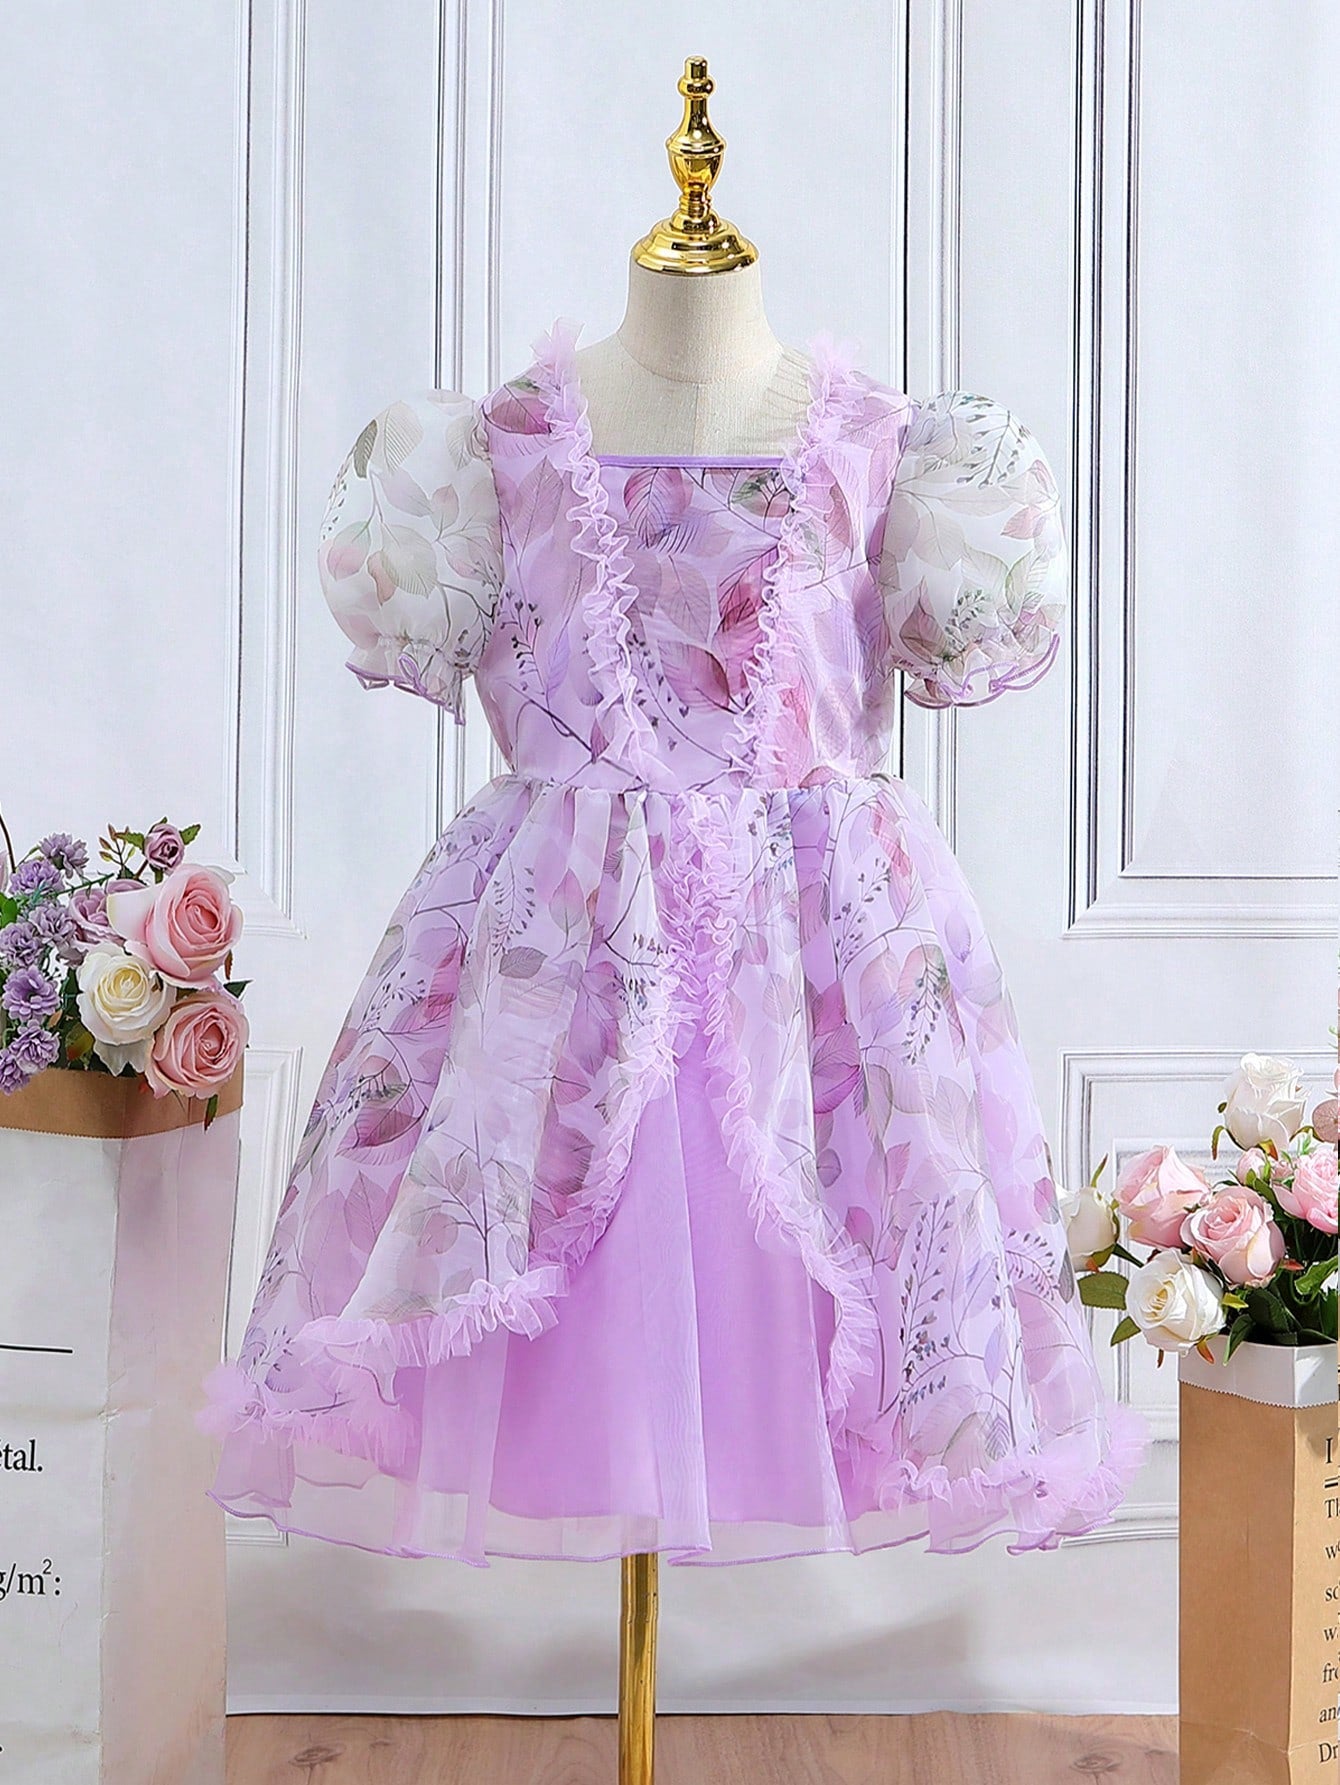 Tween Girls Floral Print Puff Sleeve Organza Overlay Dress